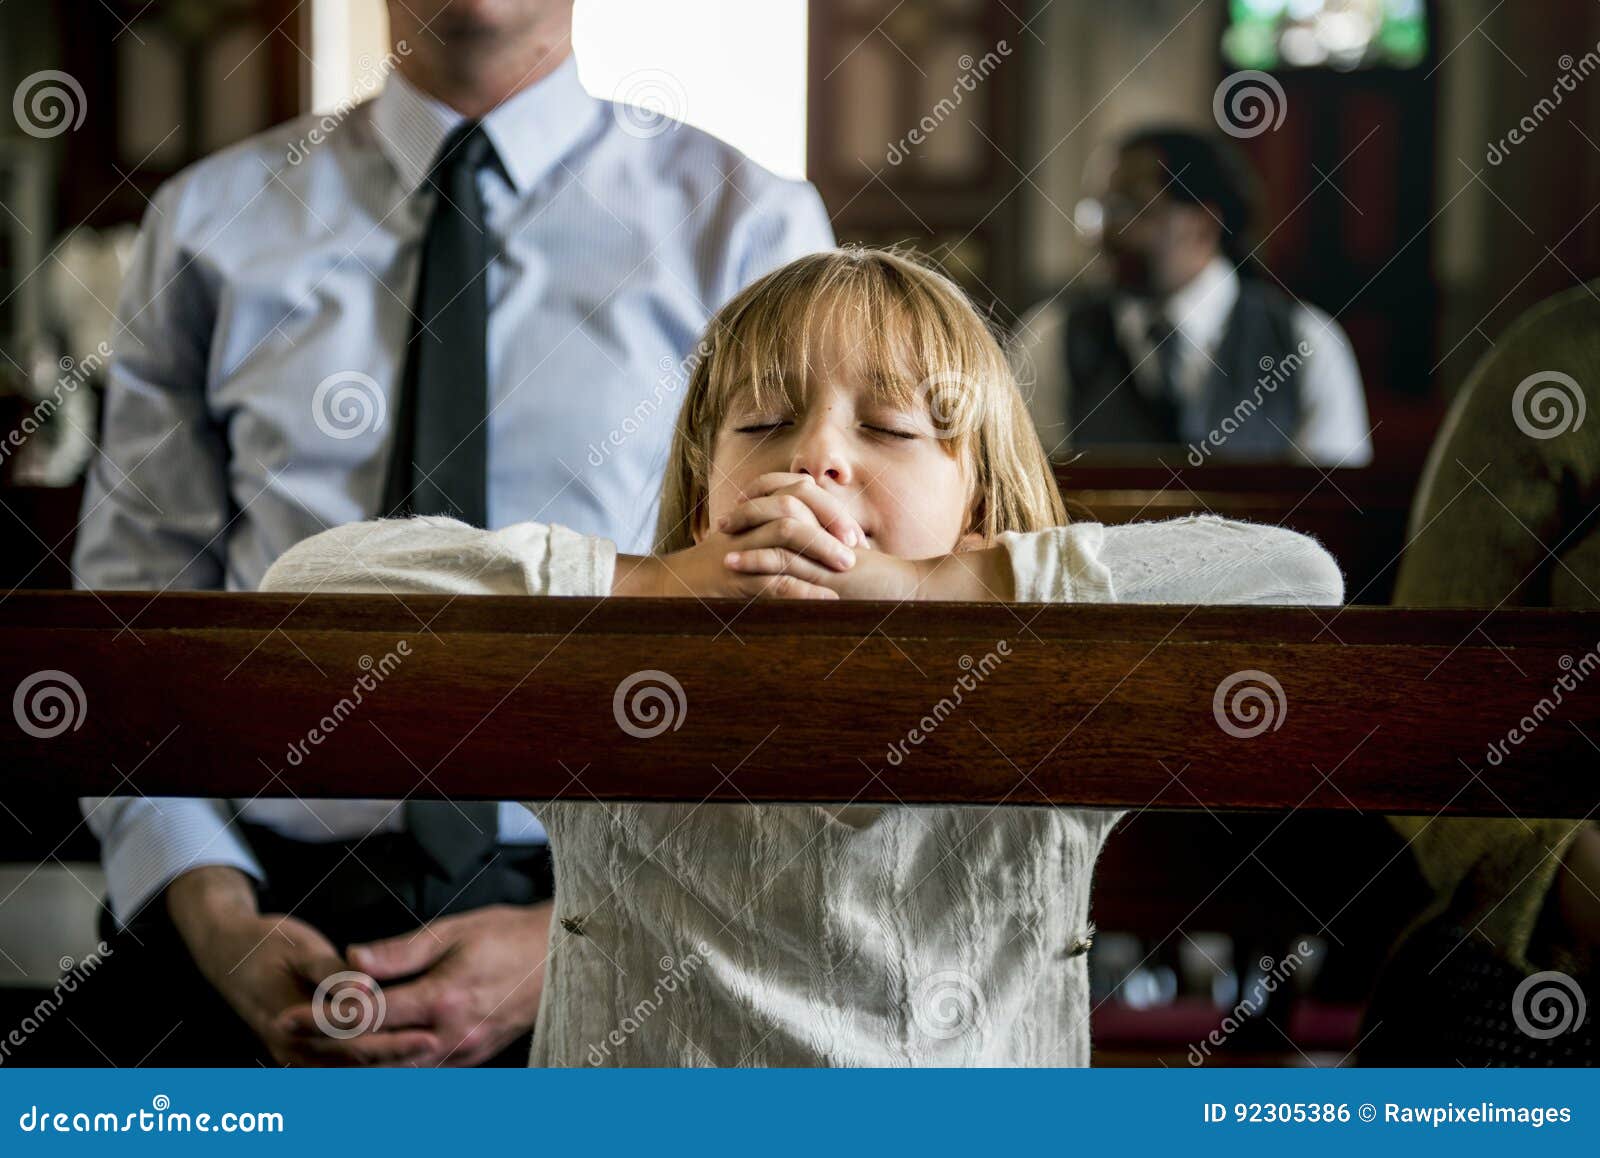 little girl praying church believe faith religious